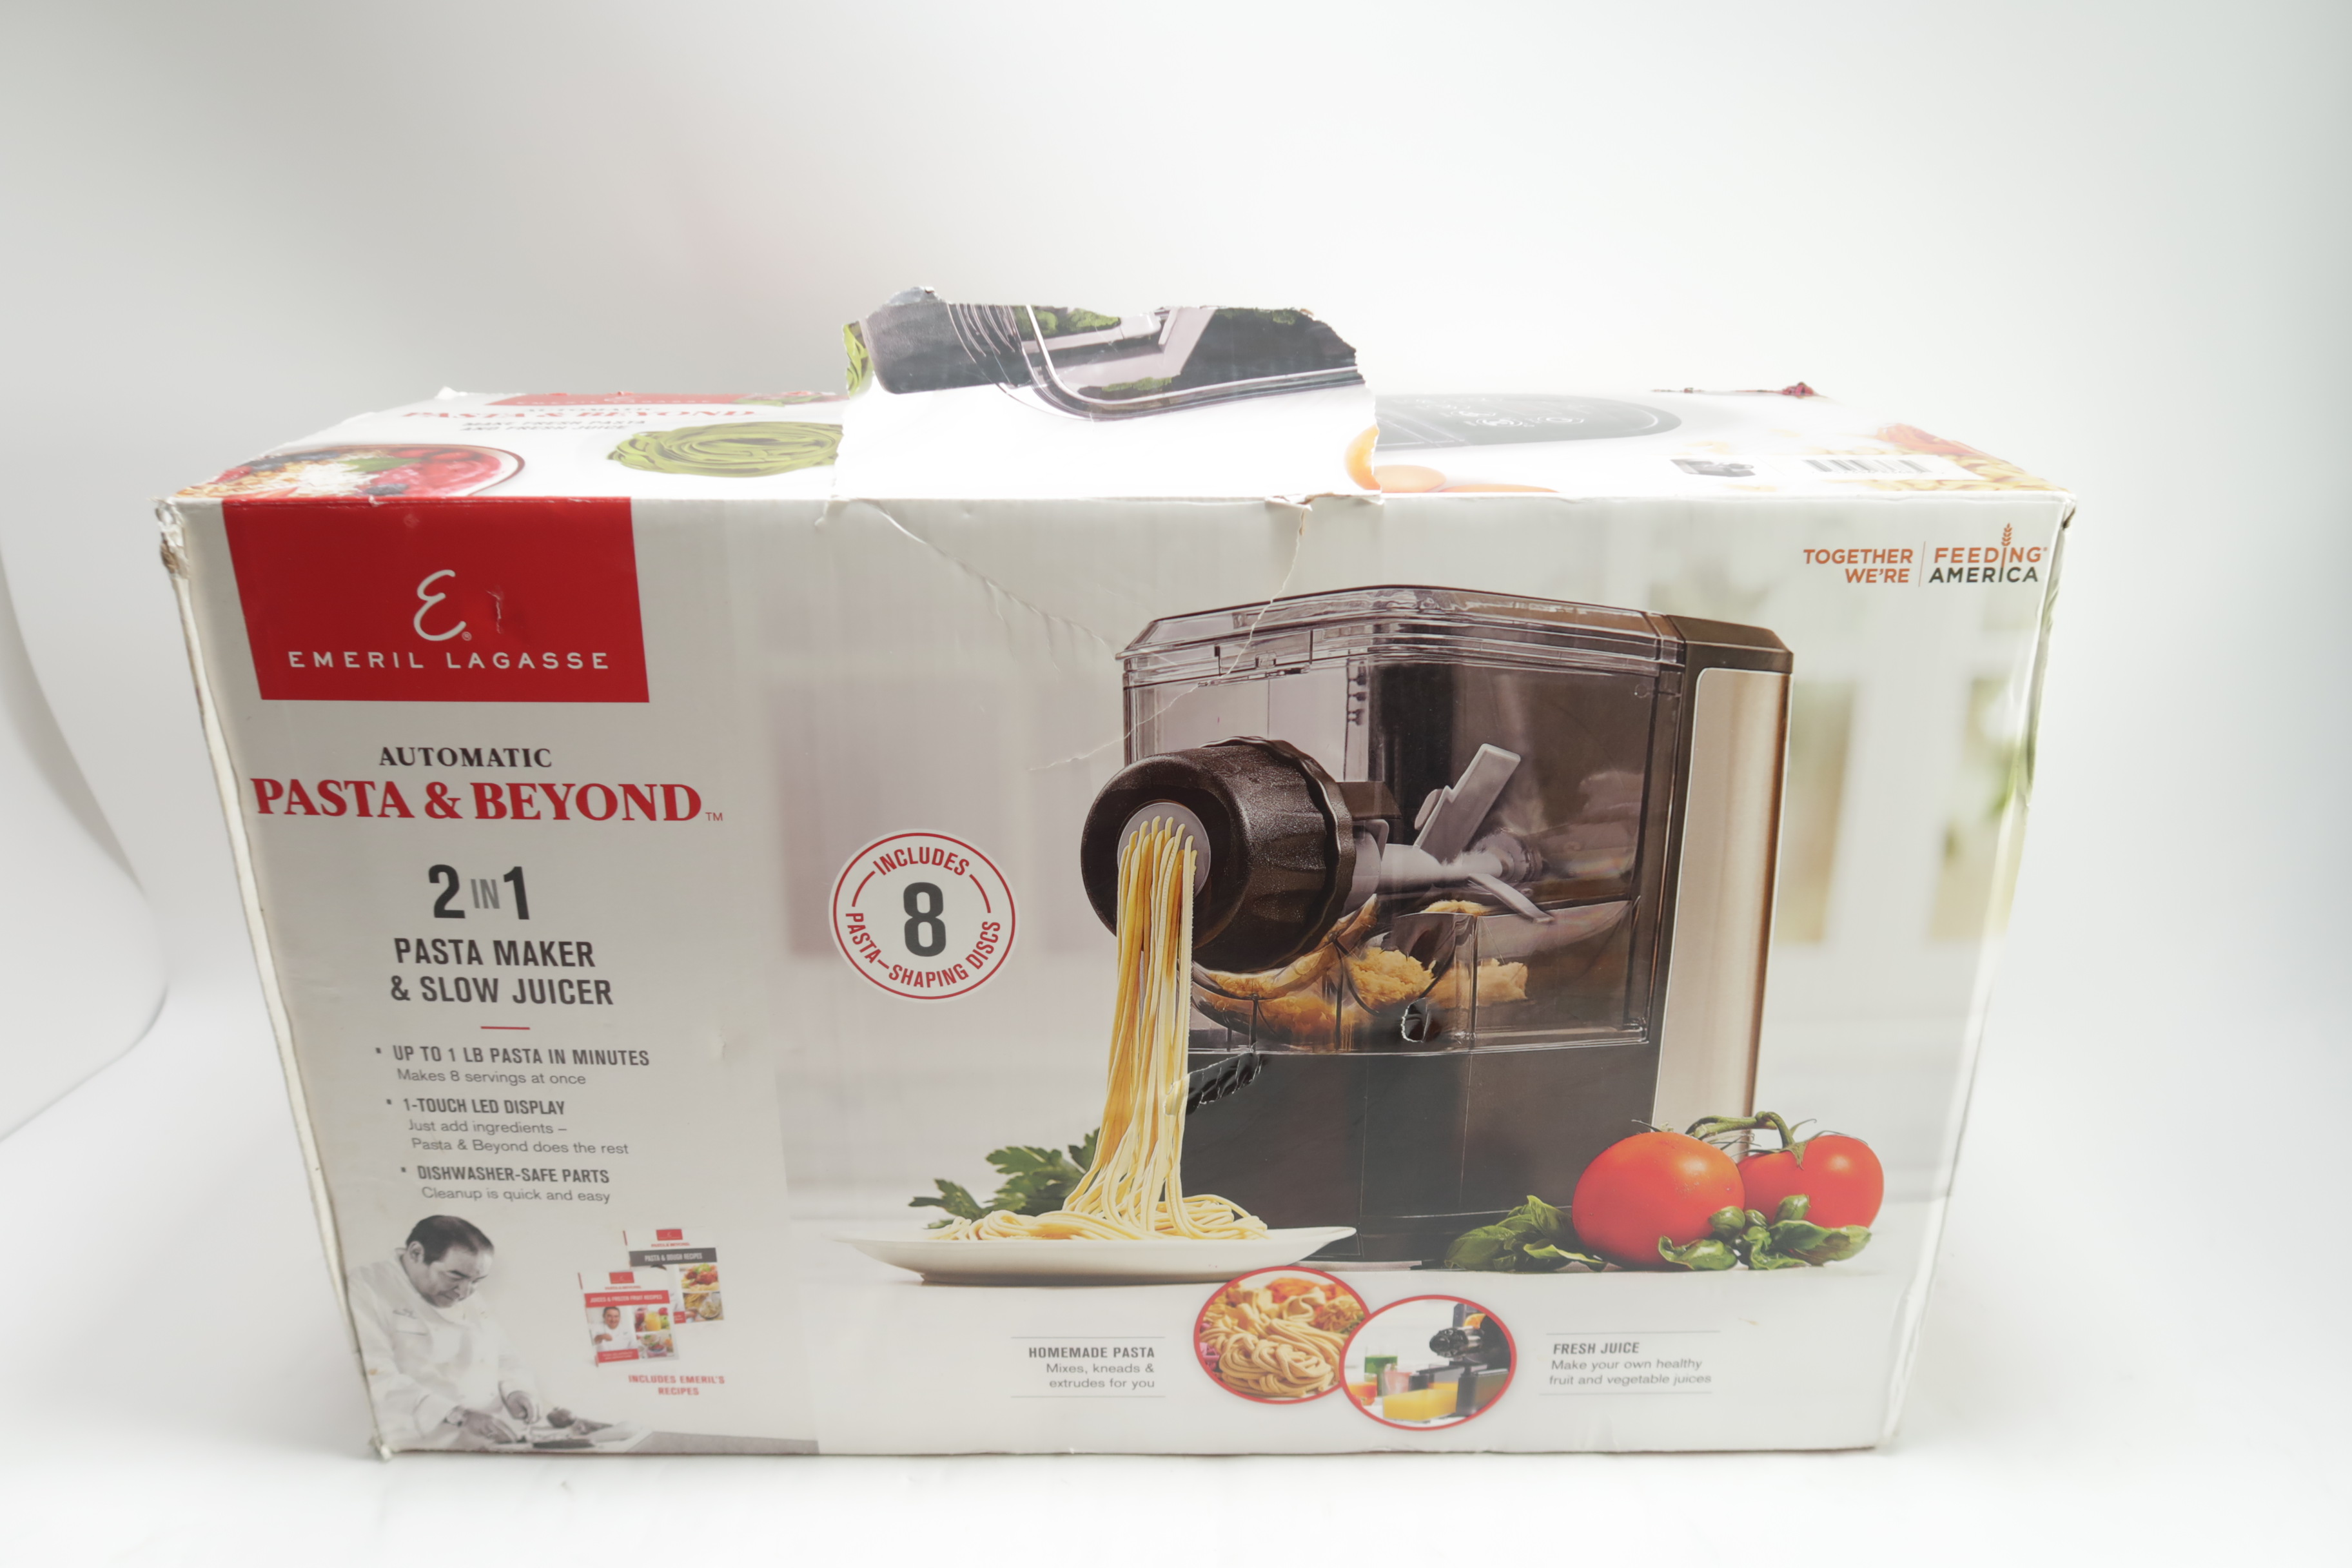 Emeril Lagasse Pasta & Beyond, 4-in-1 Pasta Maker and Juicer in Black